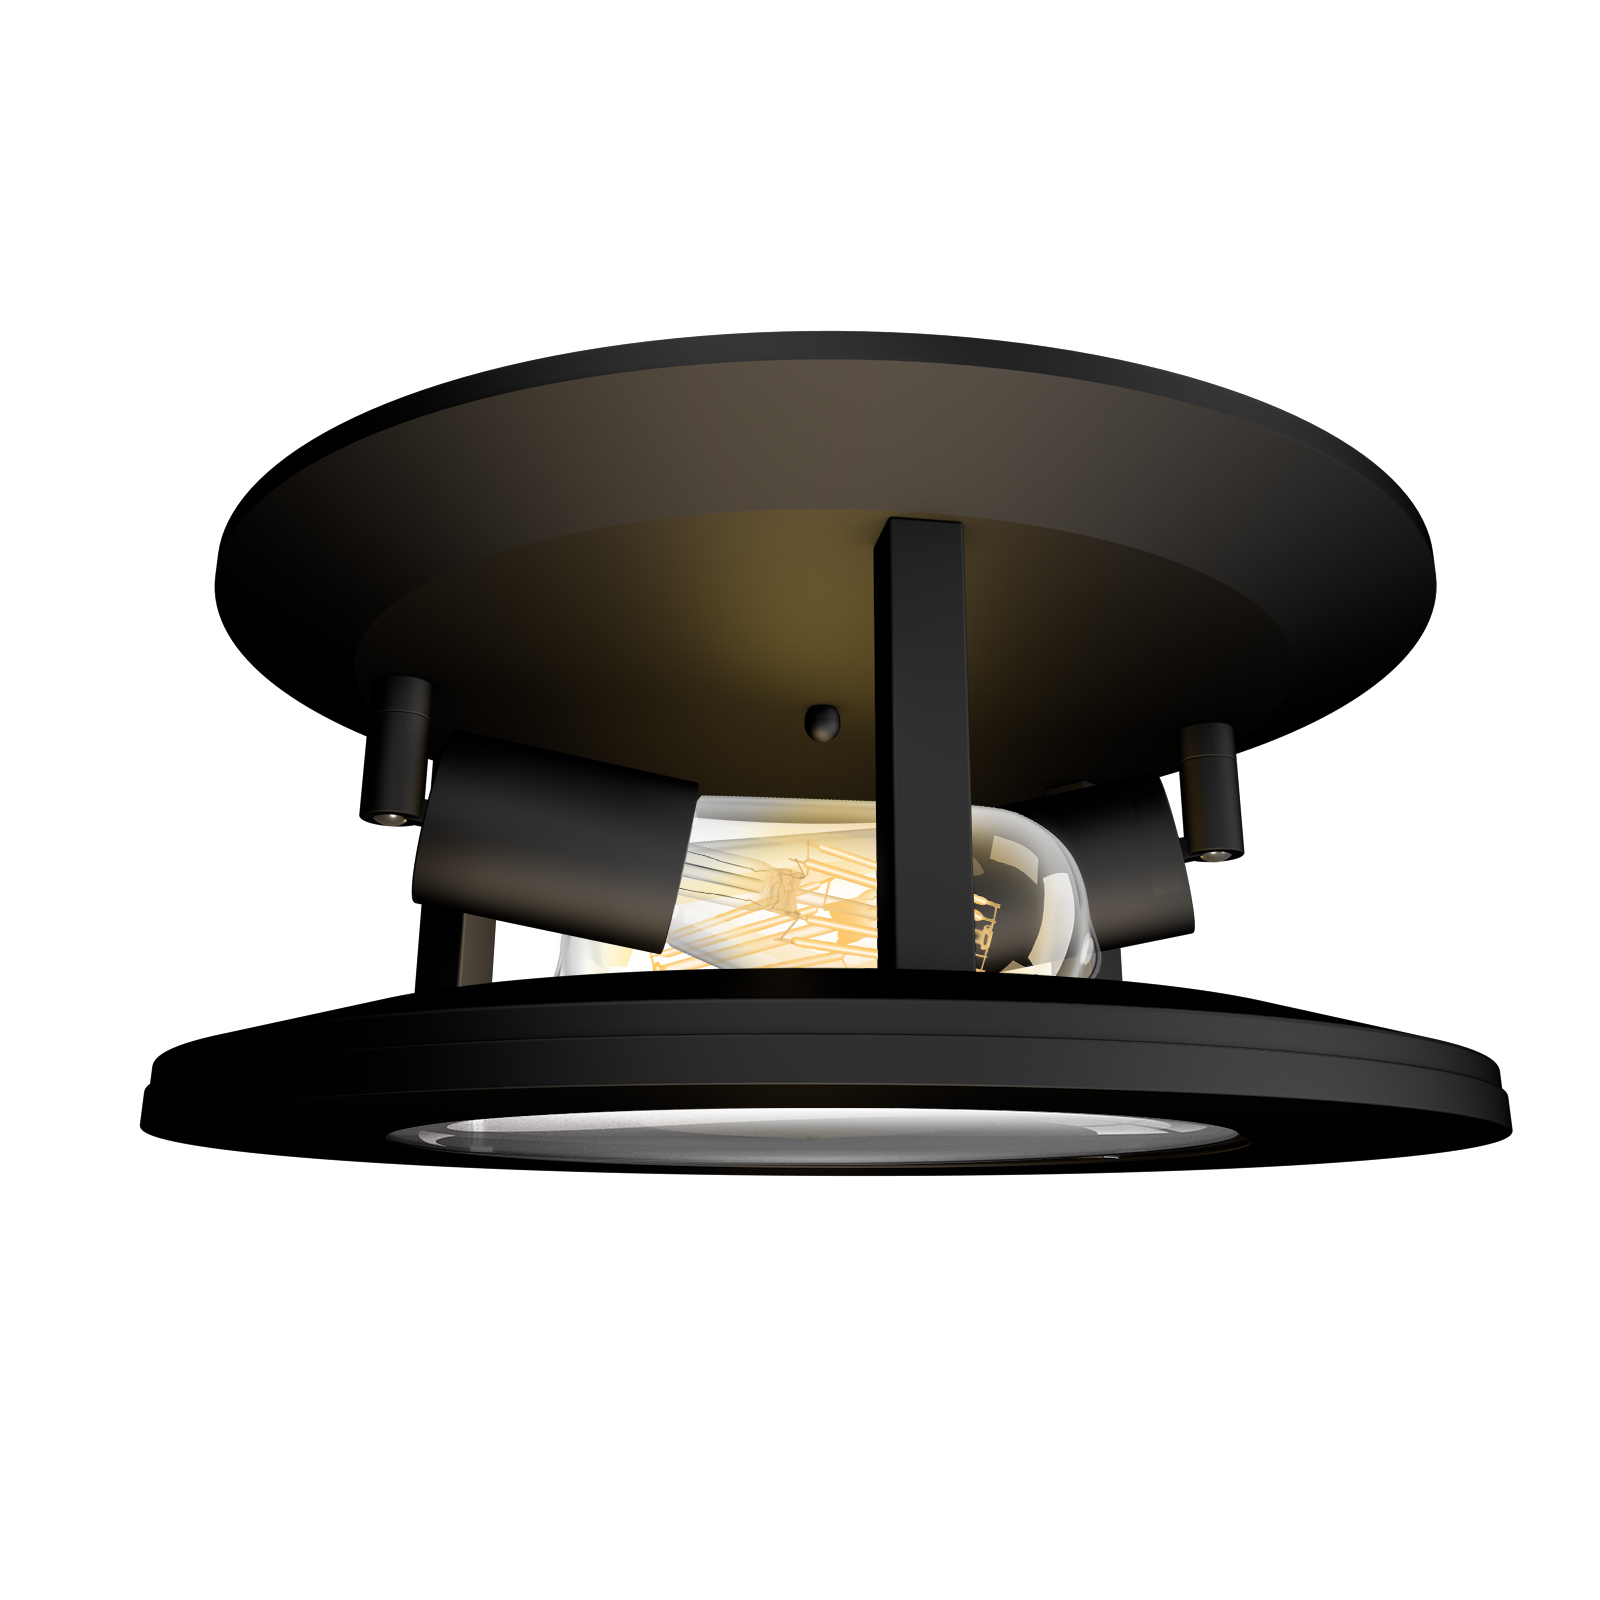 Luminaria de techo industrial, 2-Accesorio de iluminación de montaje empotrado Light Farmhouse, Acabado en metal negro con vidrio sembrado para cocina,Comedor, Hallway, Vestíbulo, Ropa sucia